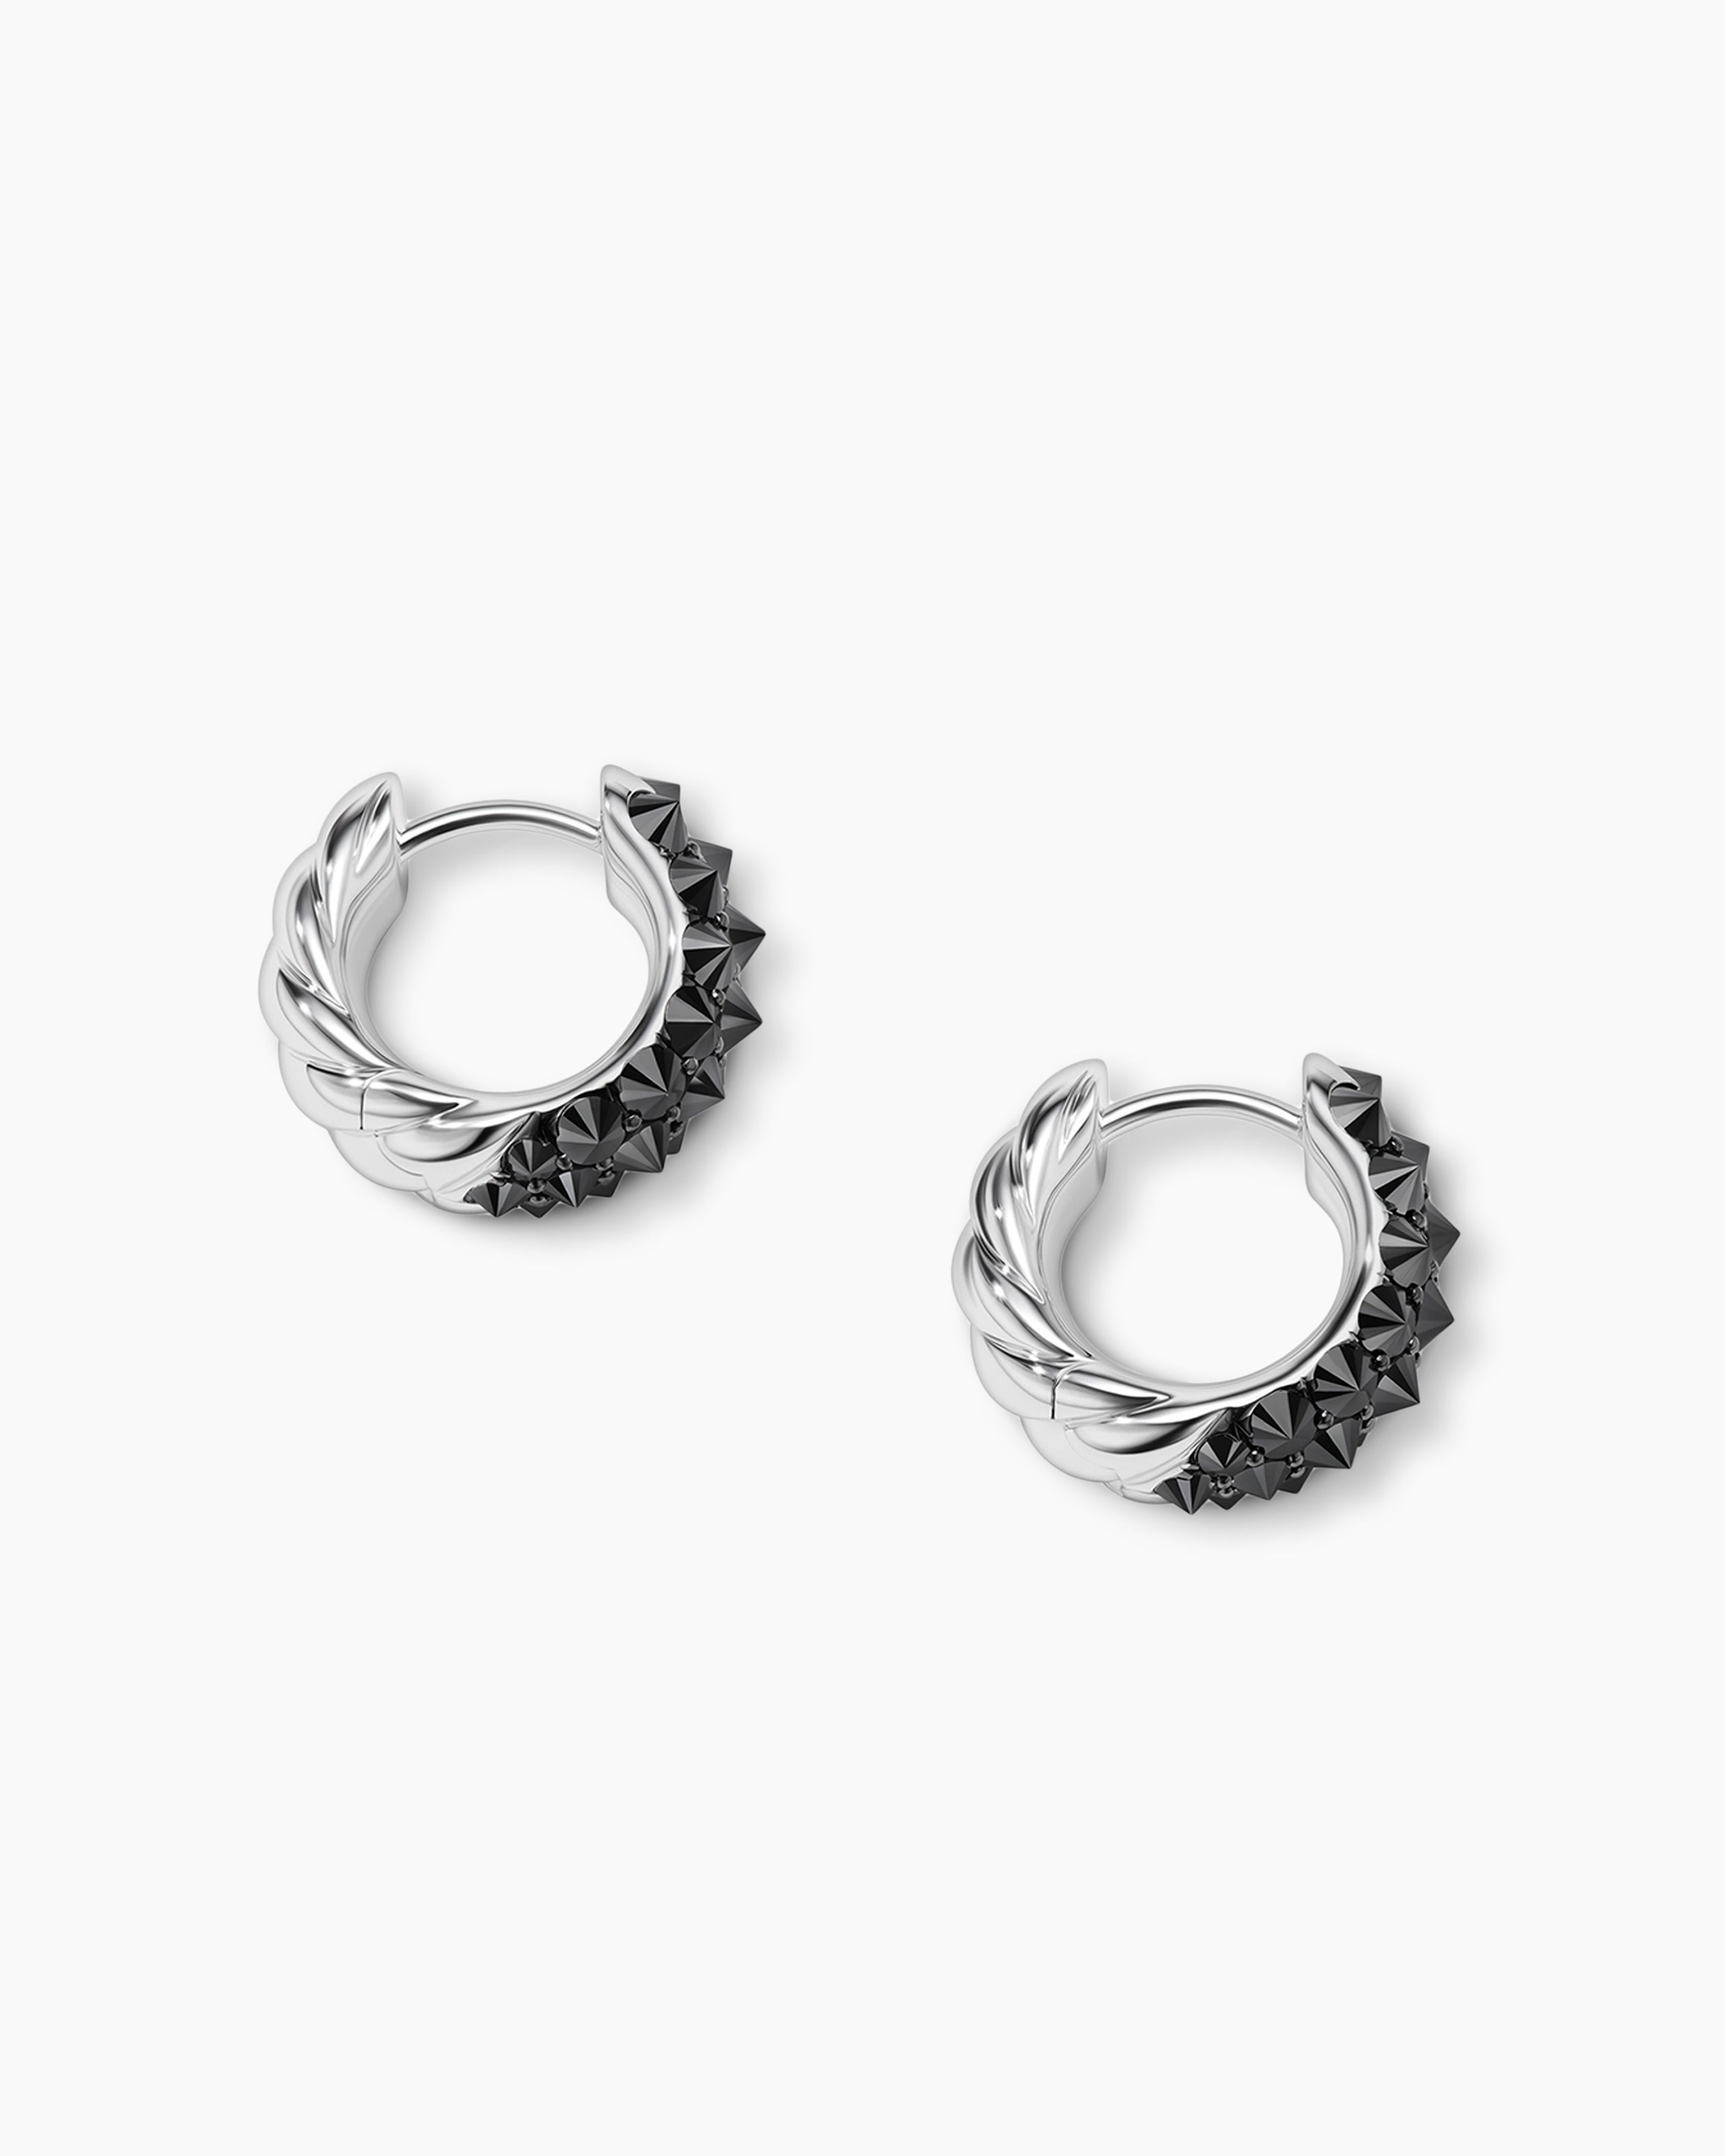 Black Half Hoop Earrings - Fashion Jewelry - The Fine World – The Fineworld